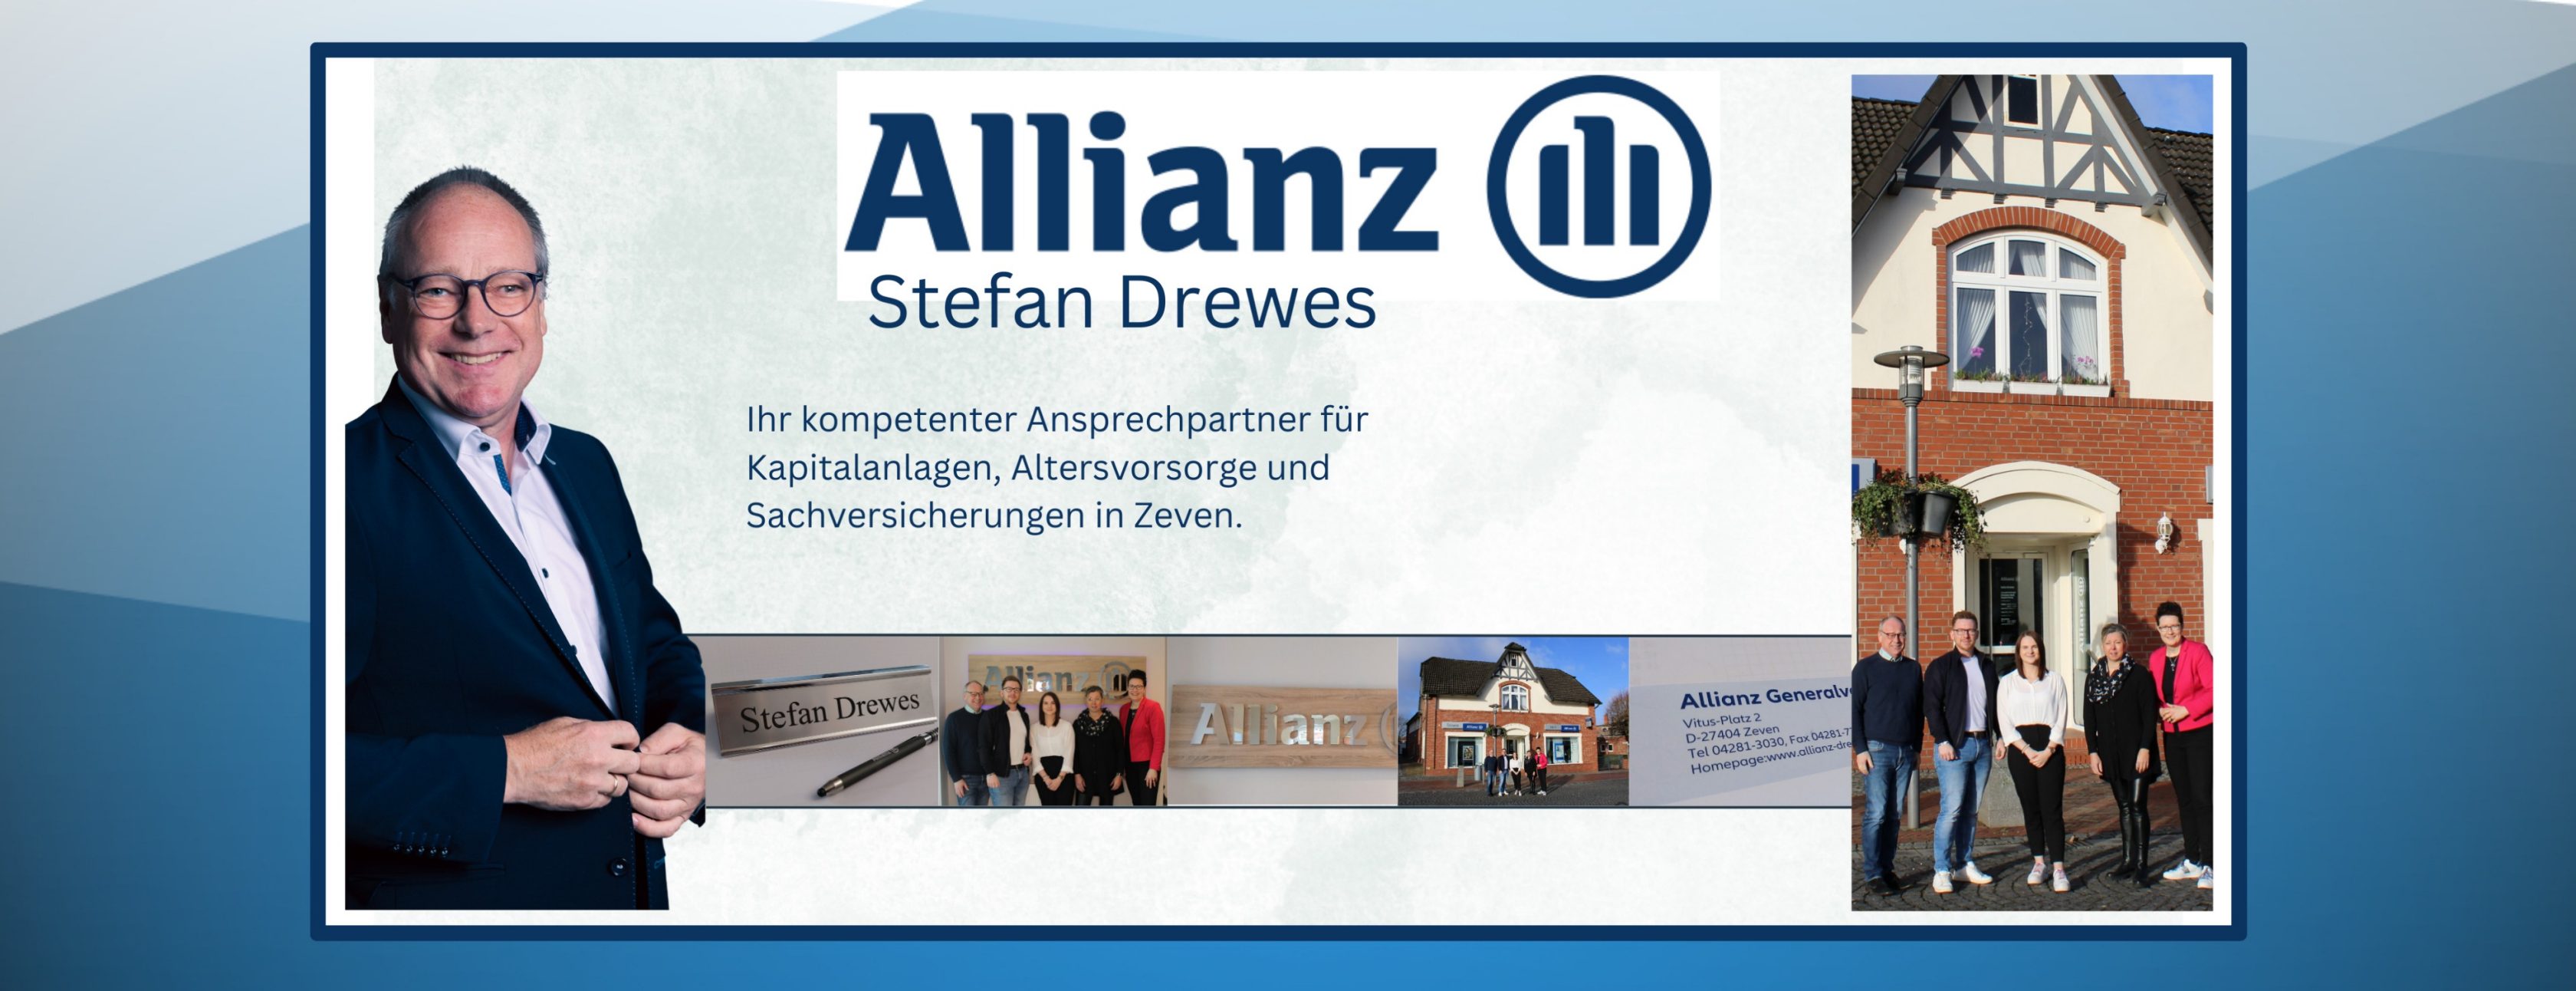 Allianz Versicherung Stefan Drewes Zeven - Allianz am Vitus-Platz